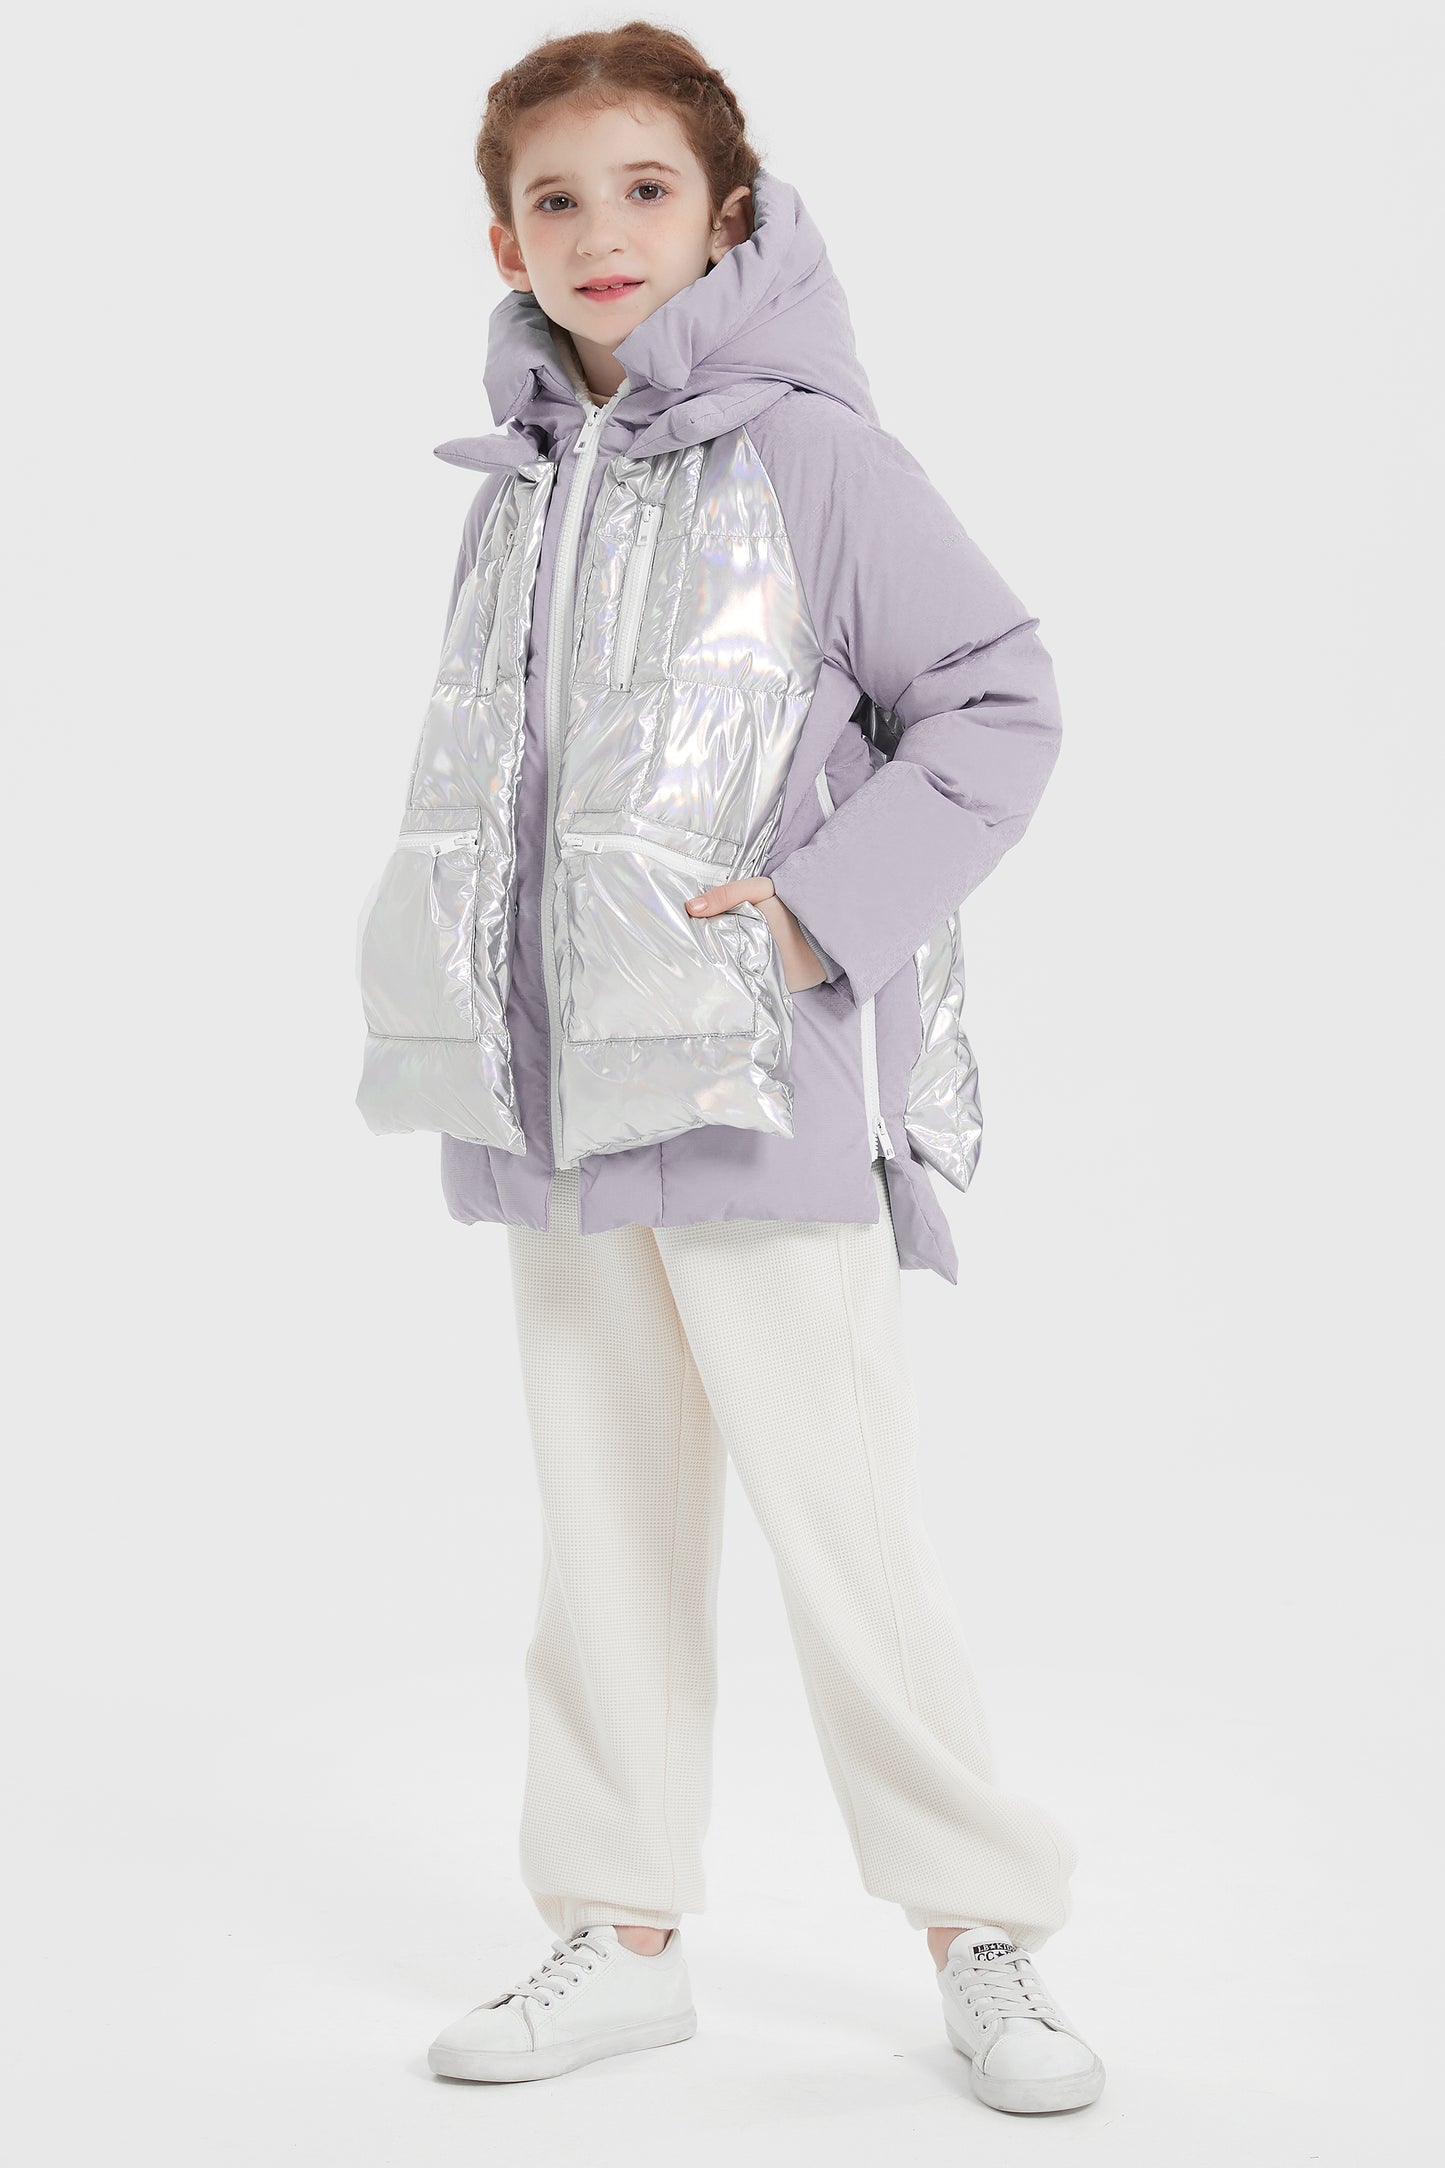 092 Universe Colorlay Kid's Shiny Metallic Puffer Jacket